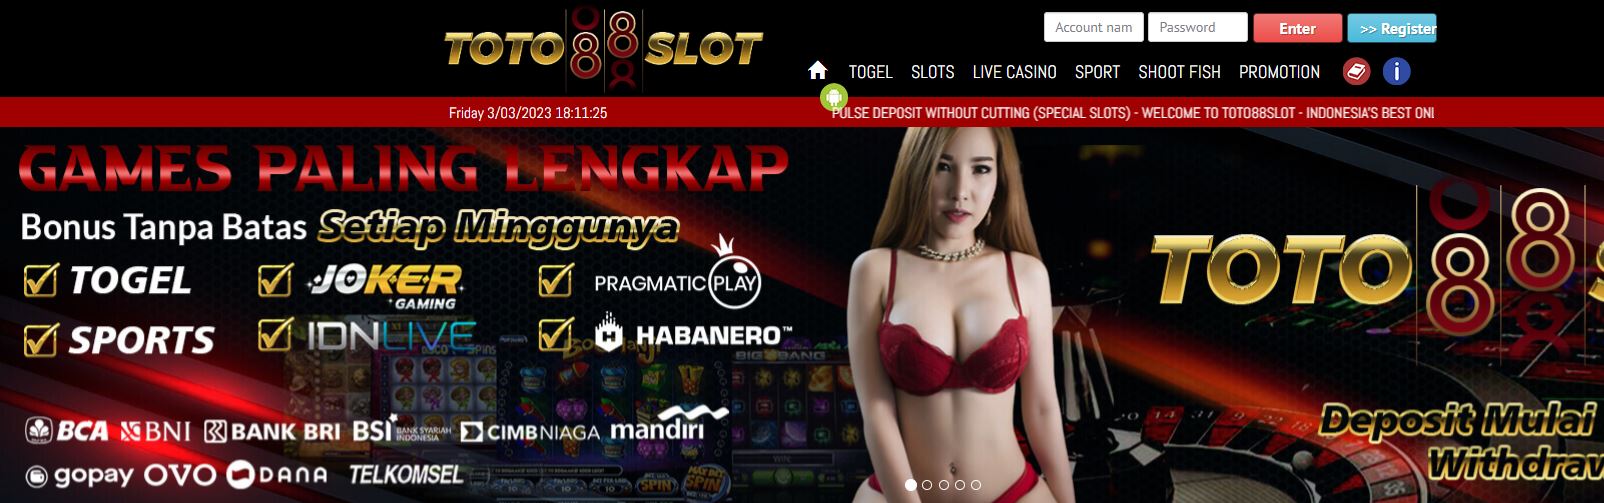 Toto88 Online Casino